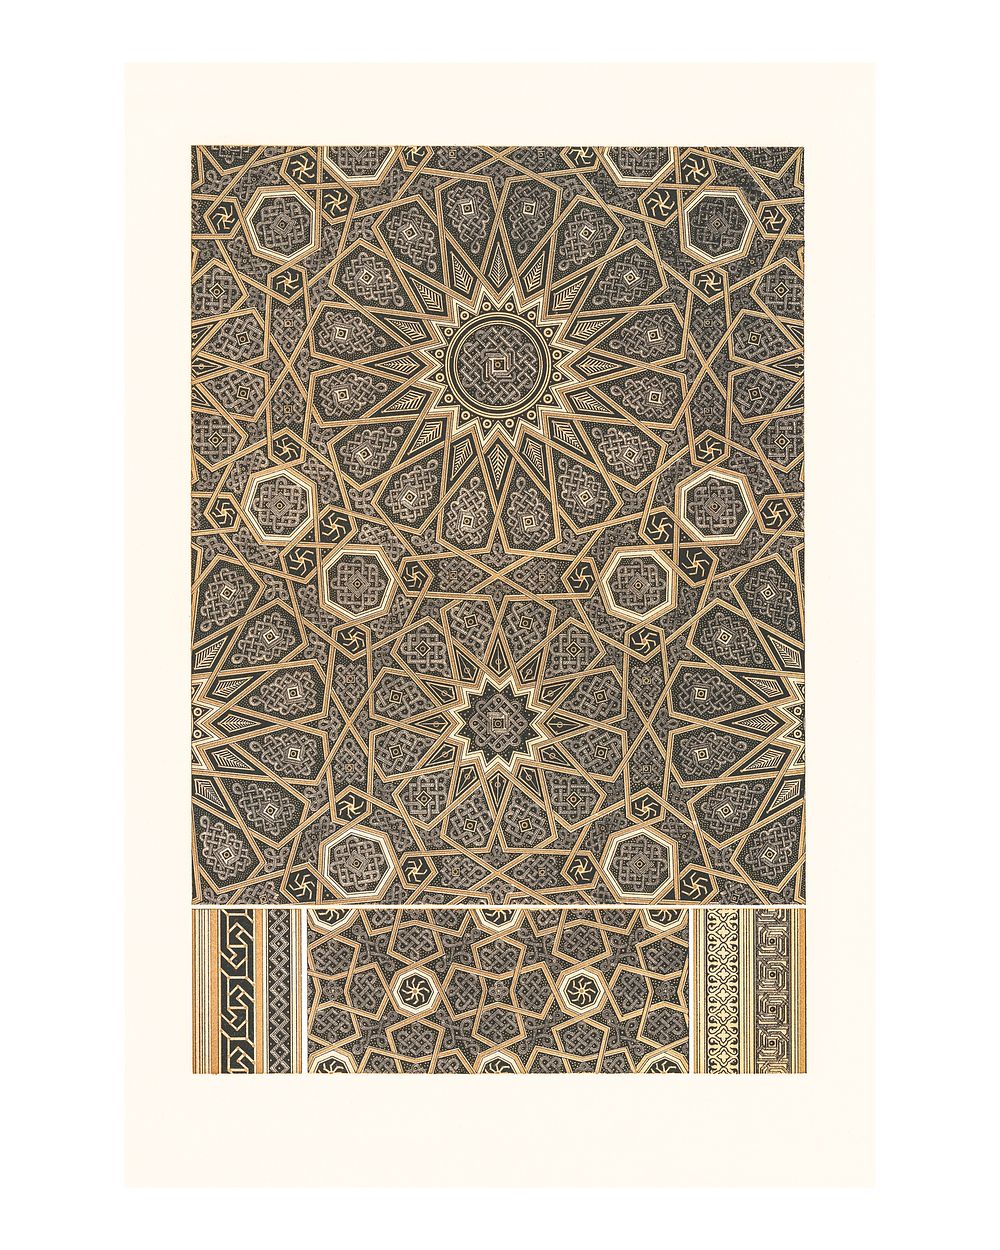 Golden Arabian pattern vintage illustration wall art print and poster design remix from original artwork